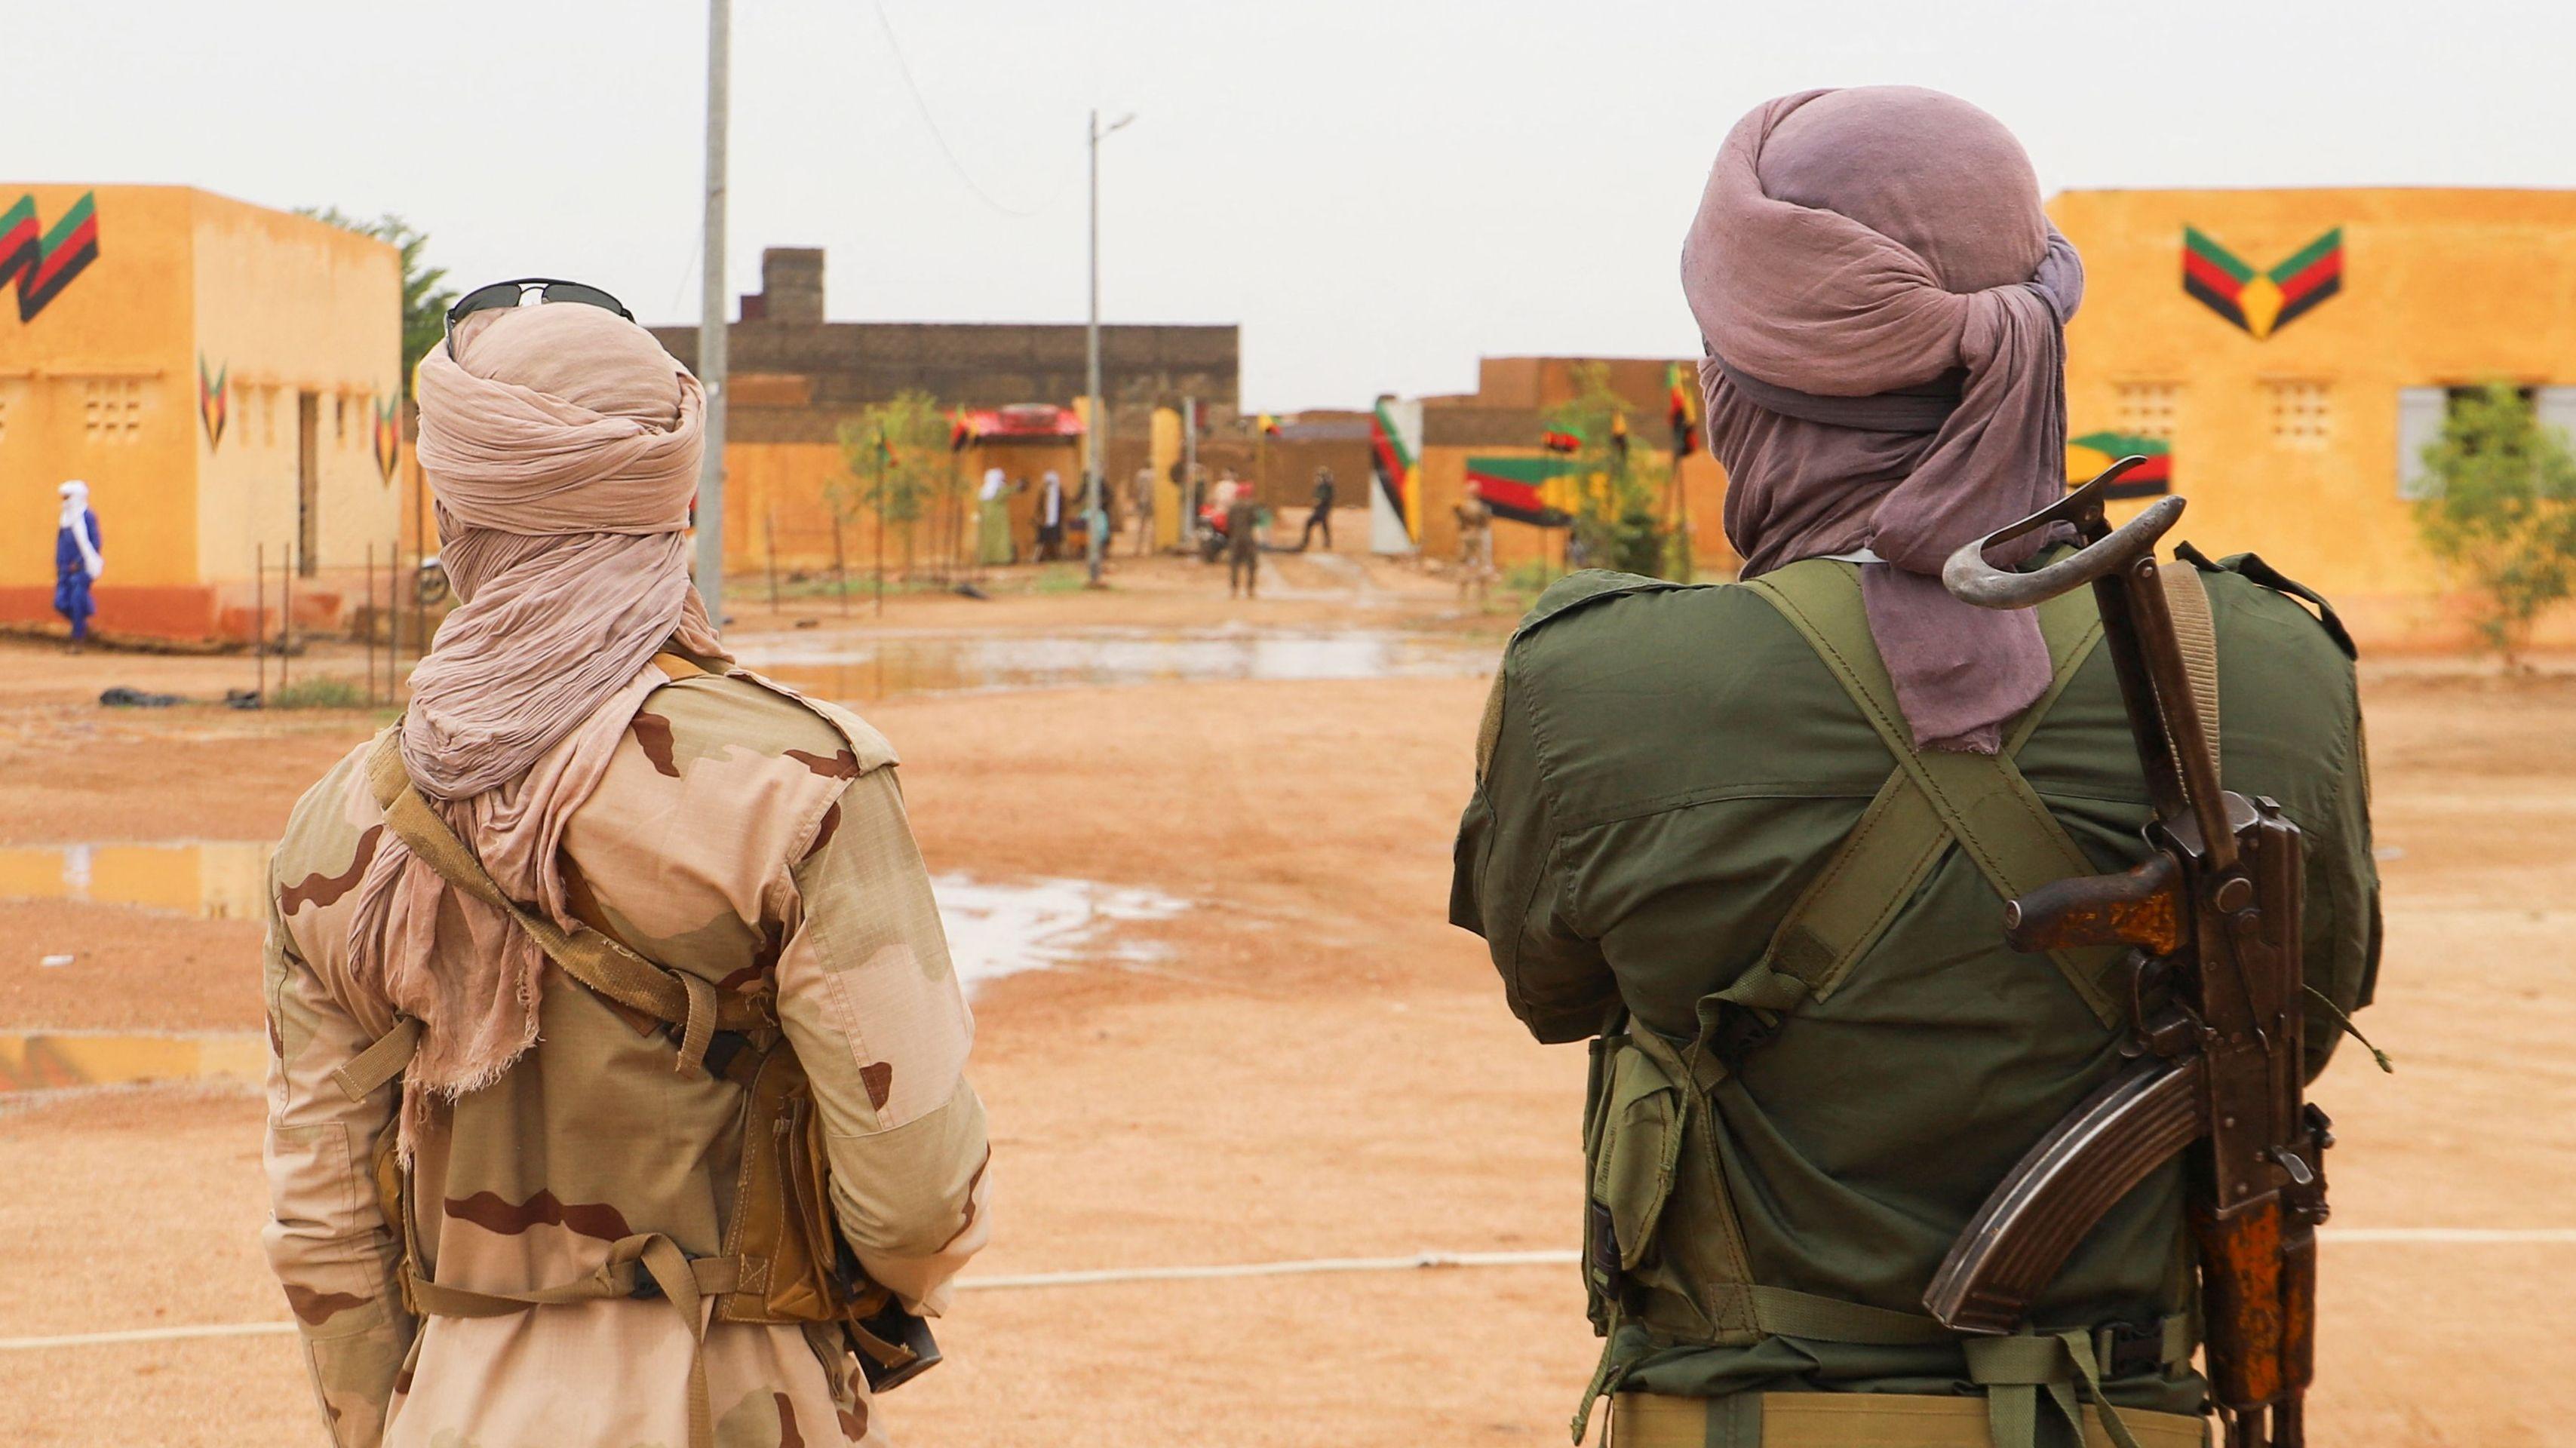 Russian commander killed in sandstorm ambush in Mali